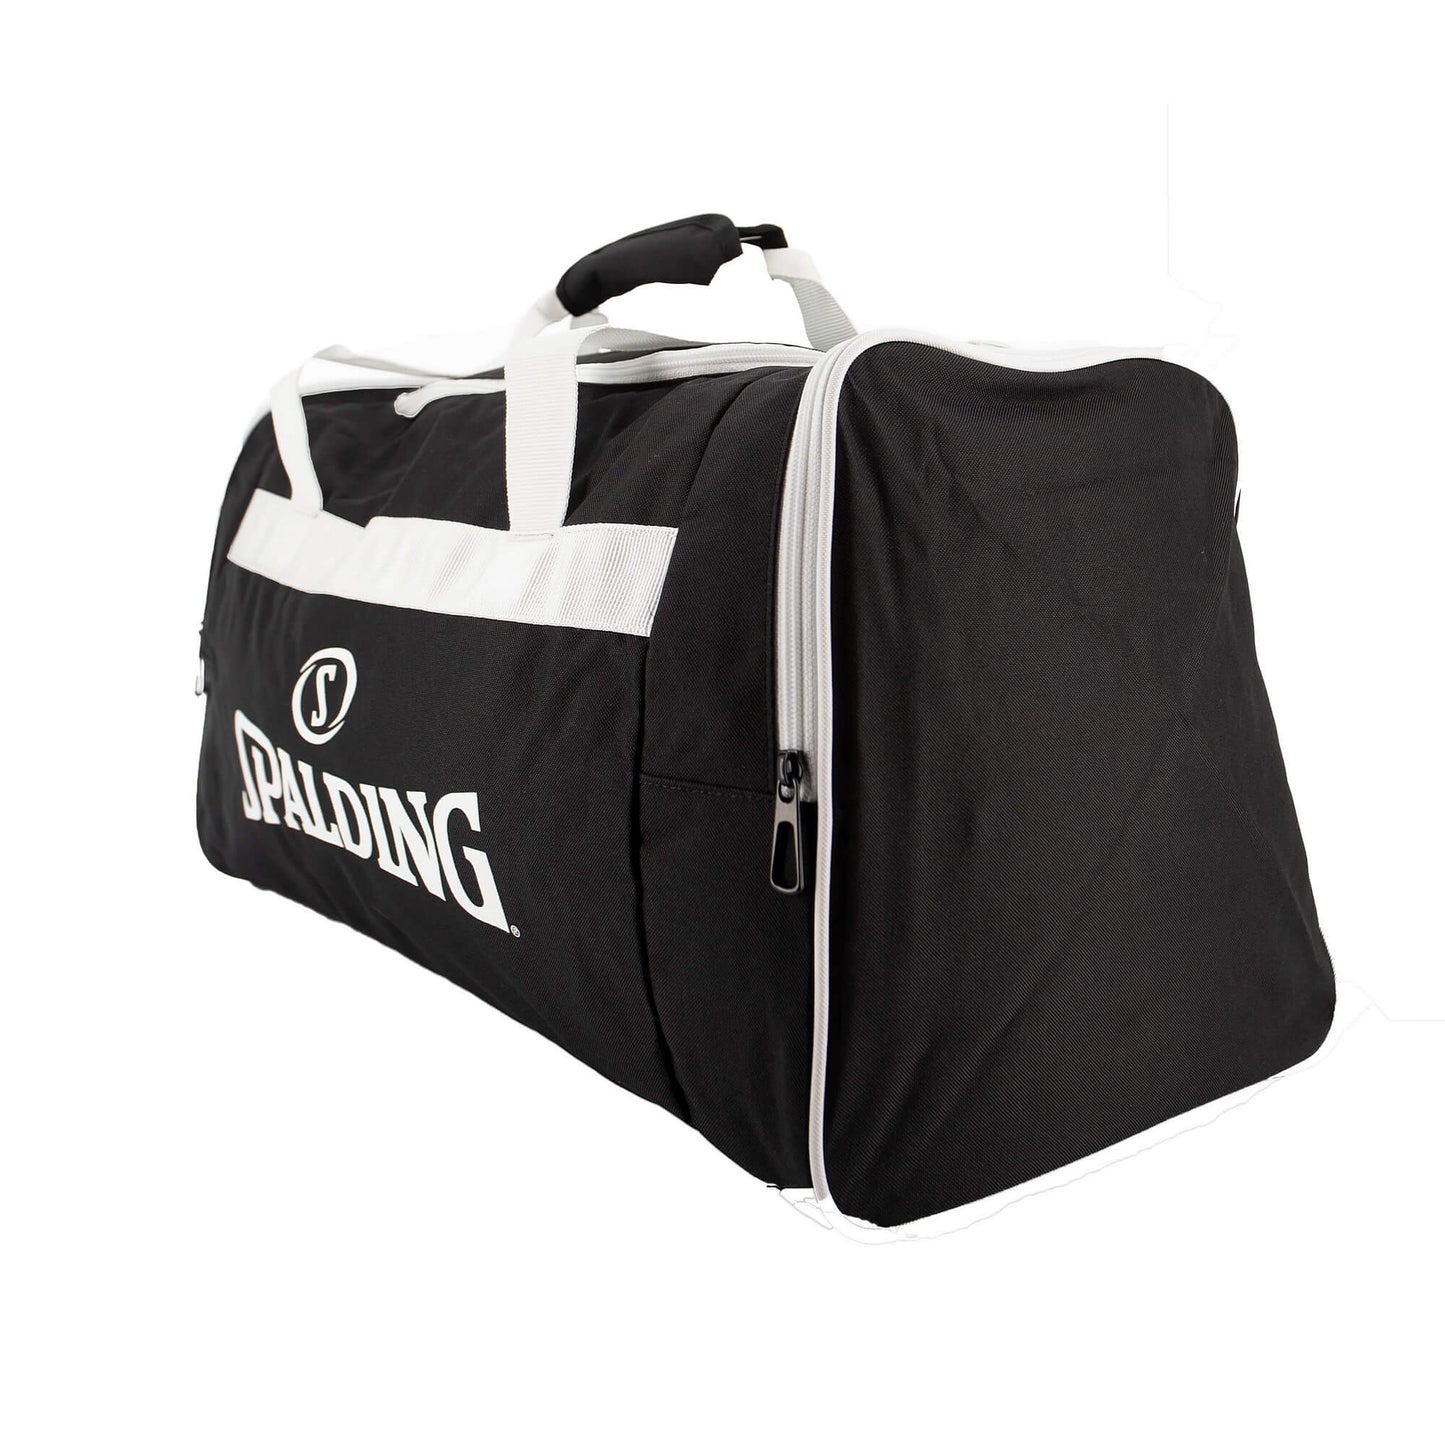 Spalding Team Bag Medium Black/White Black/White (50L)